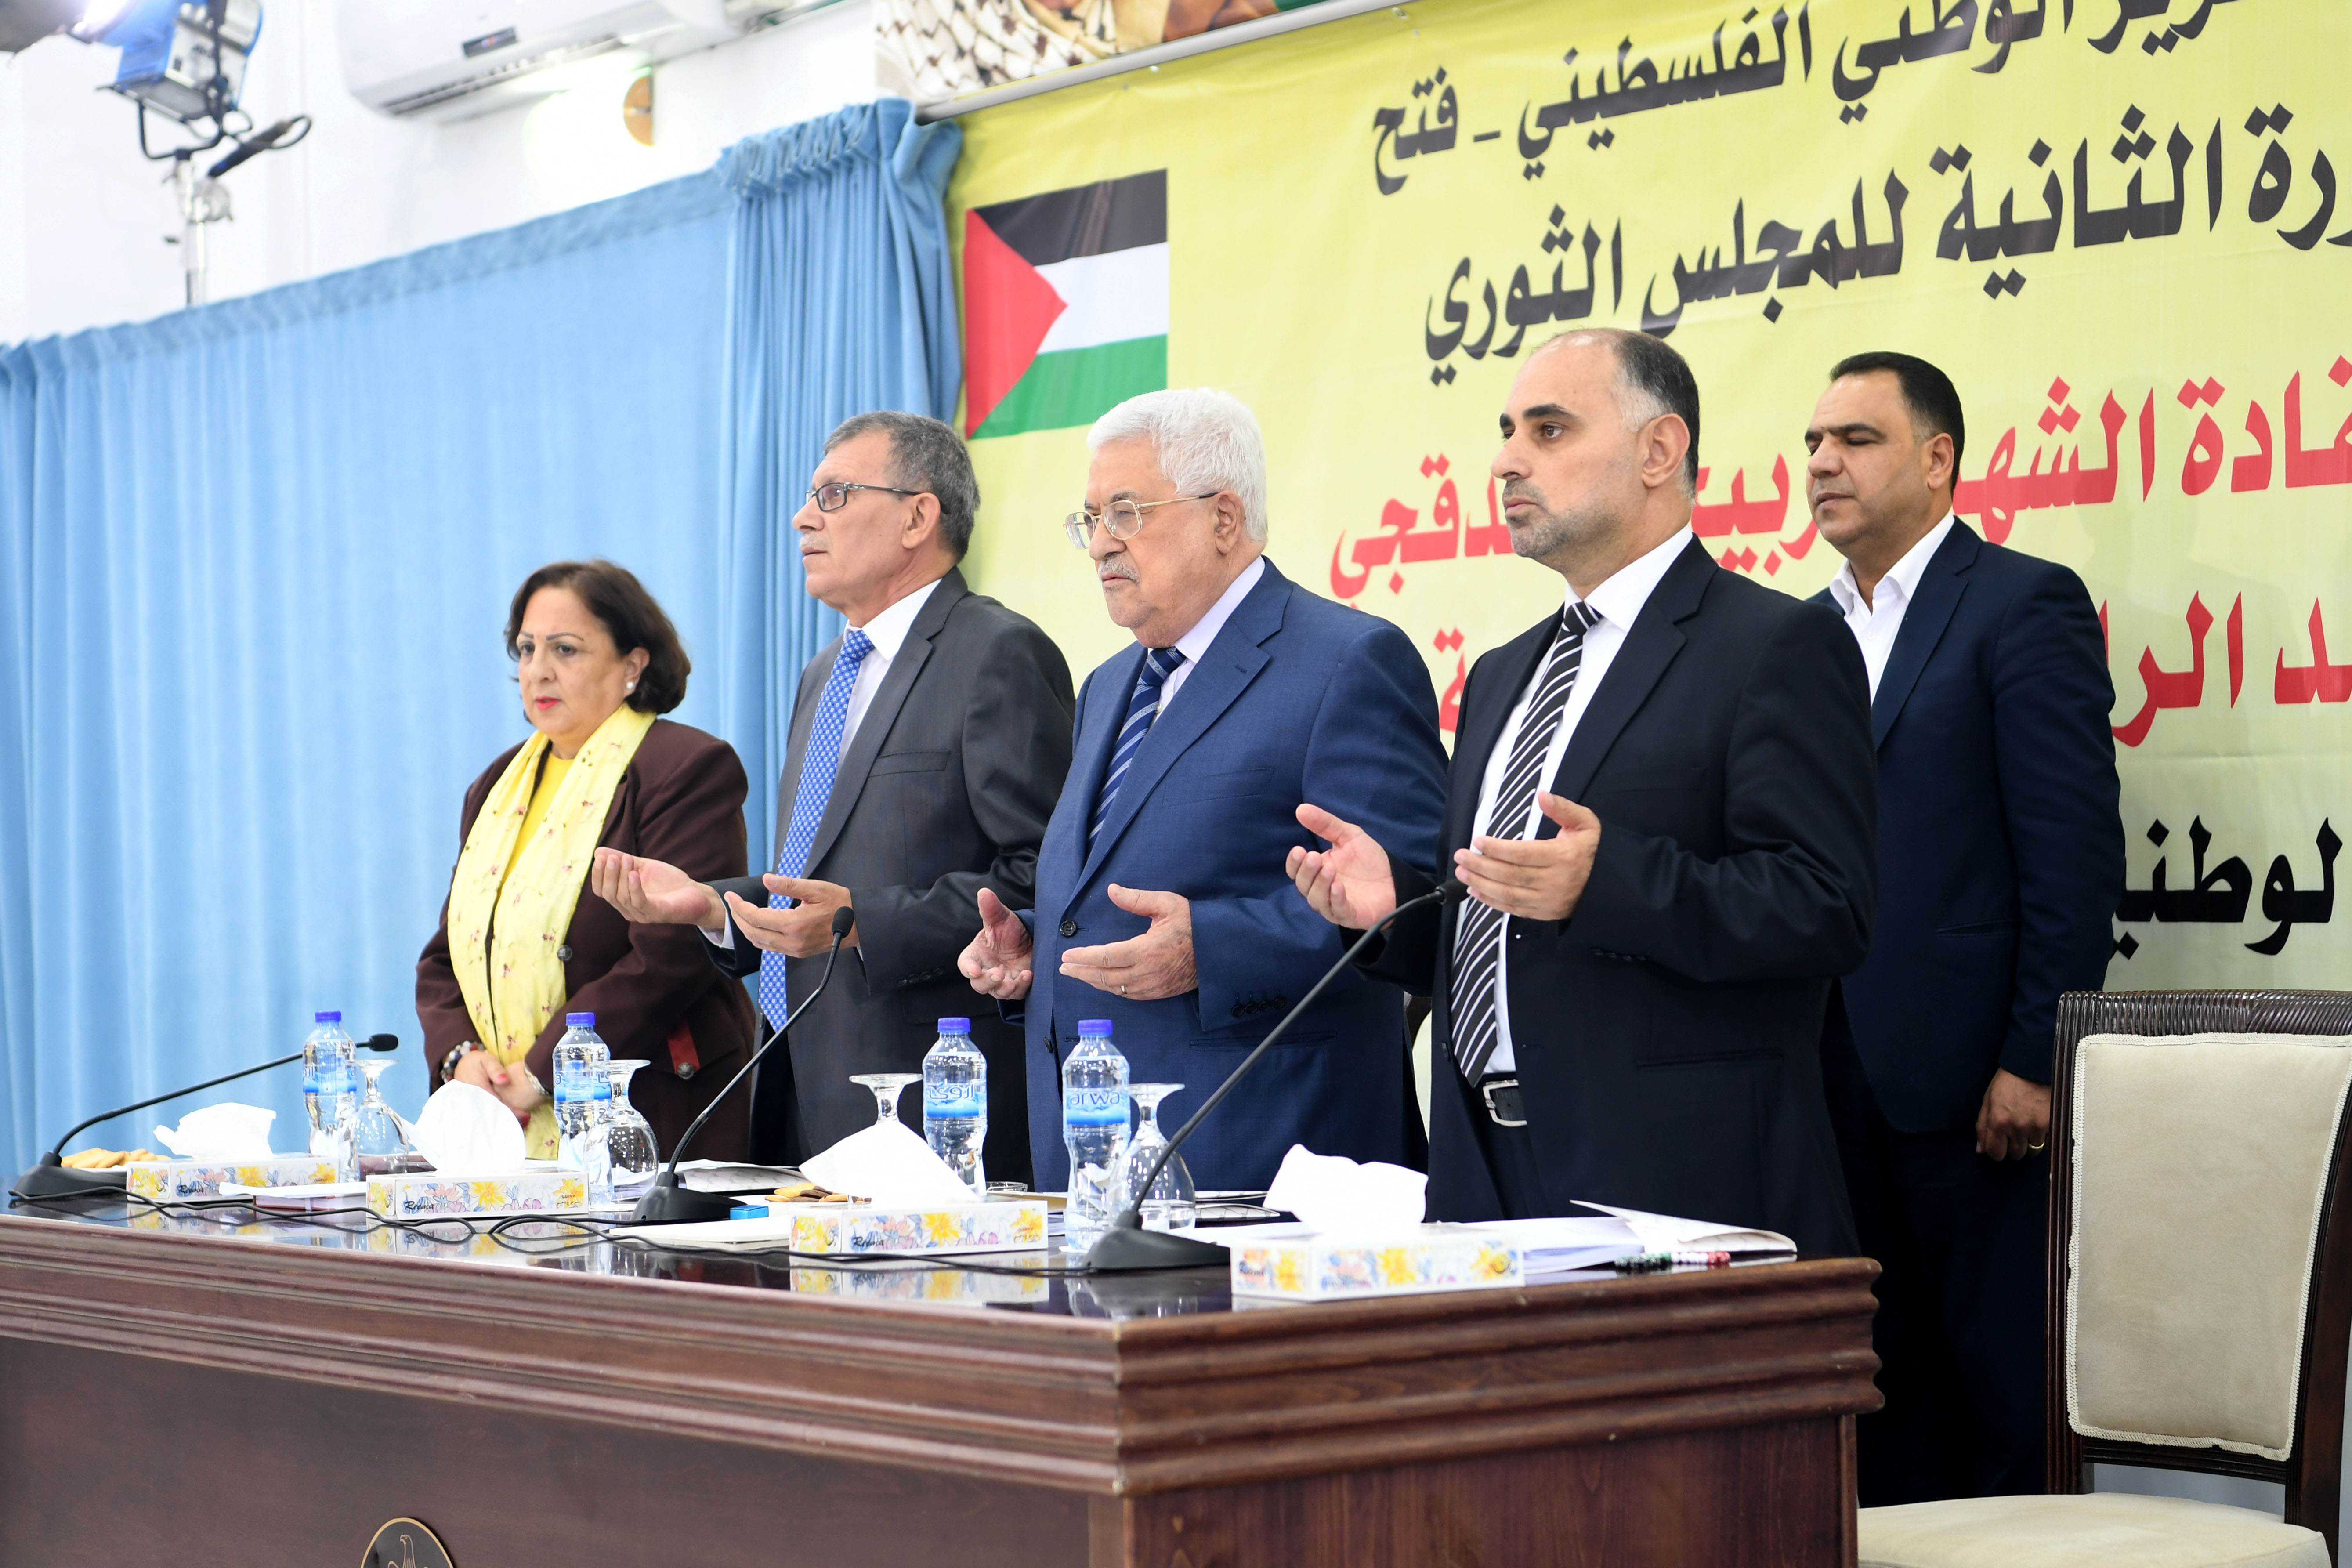 Palestinian President Mahmoud Abbas during the meeting of Fatah Revolutionary Council in Ramallah